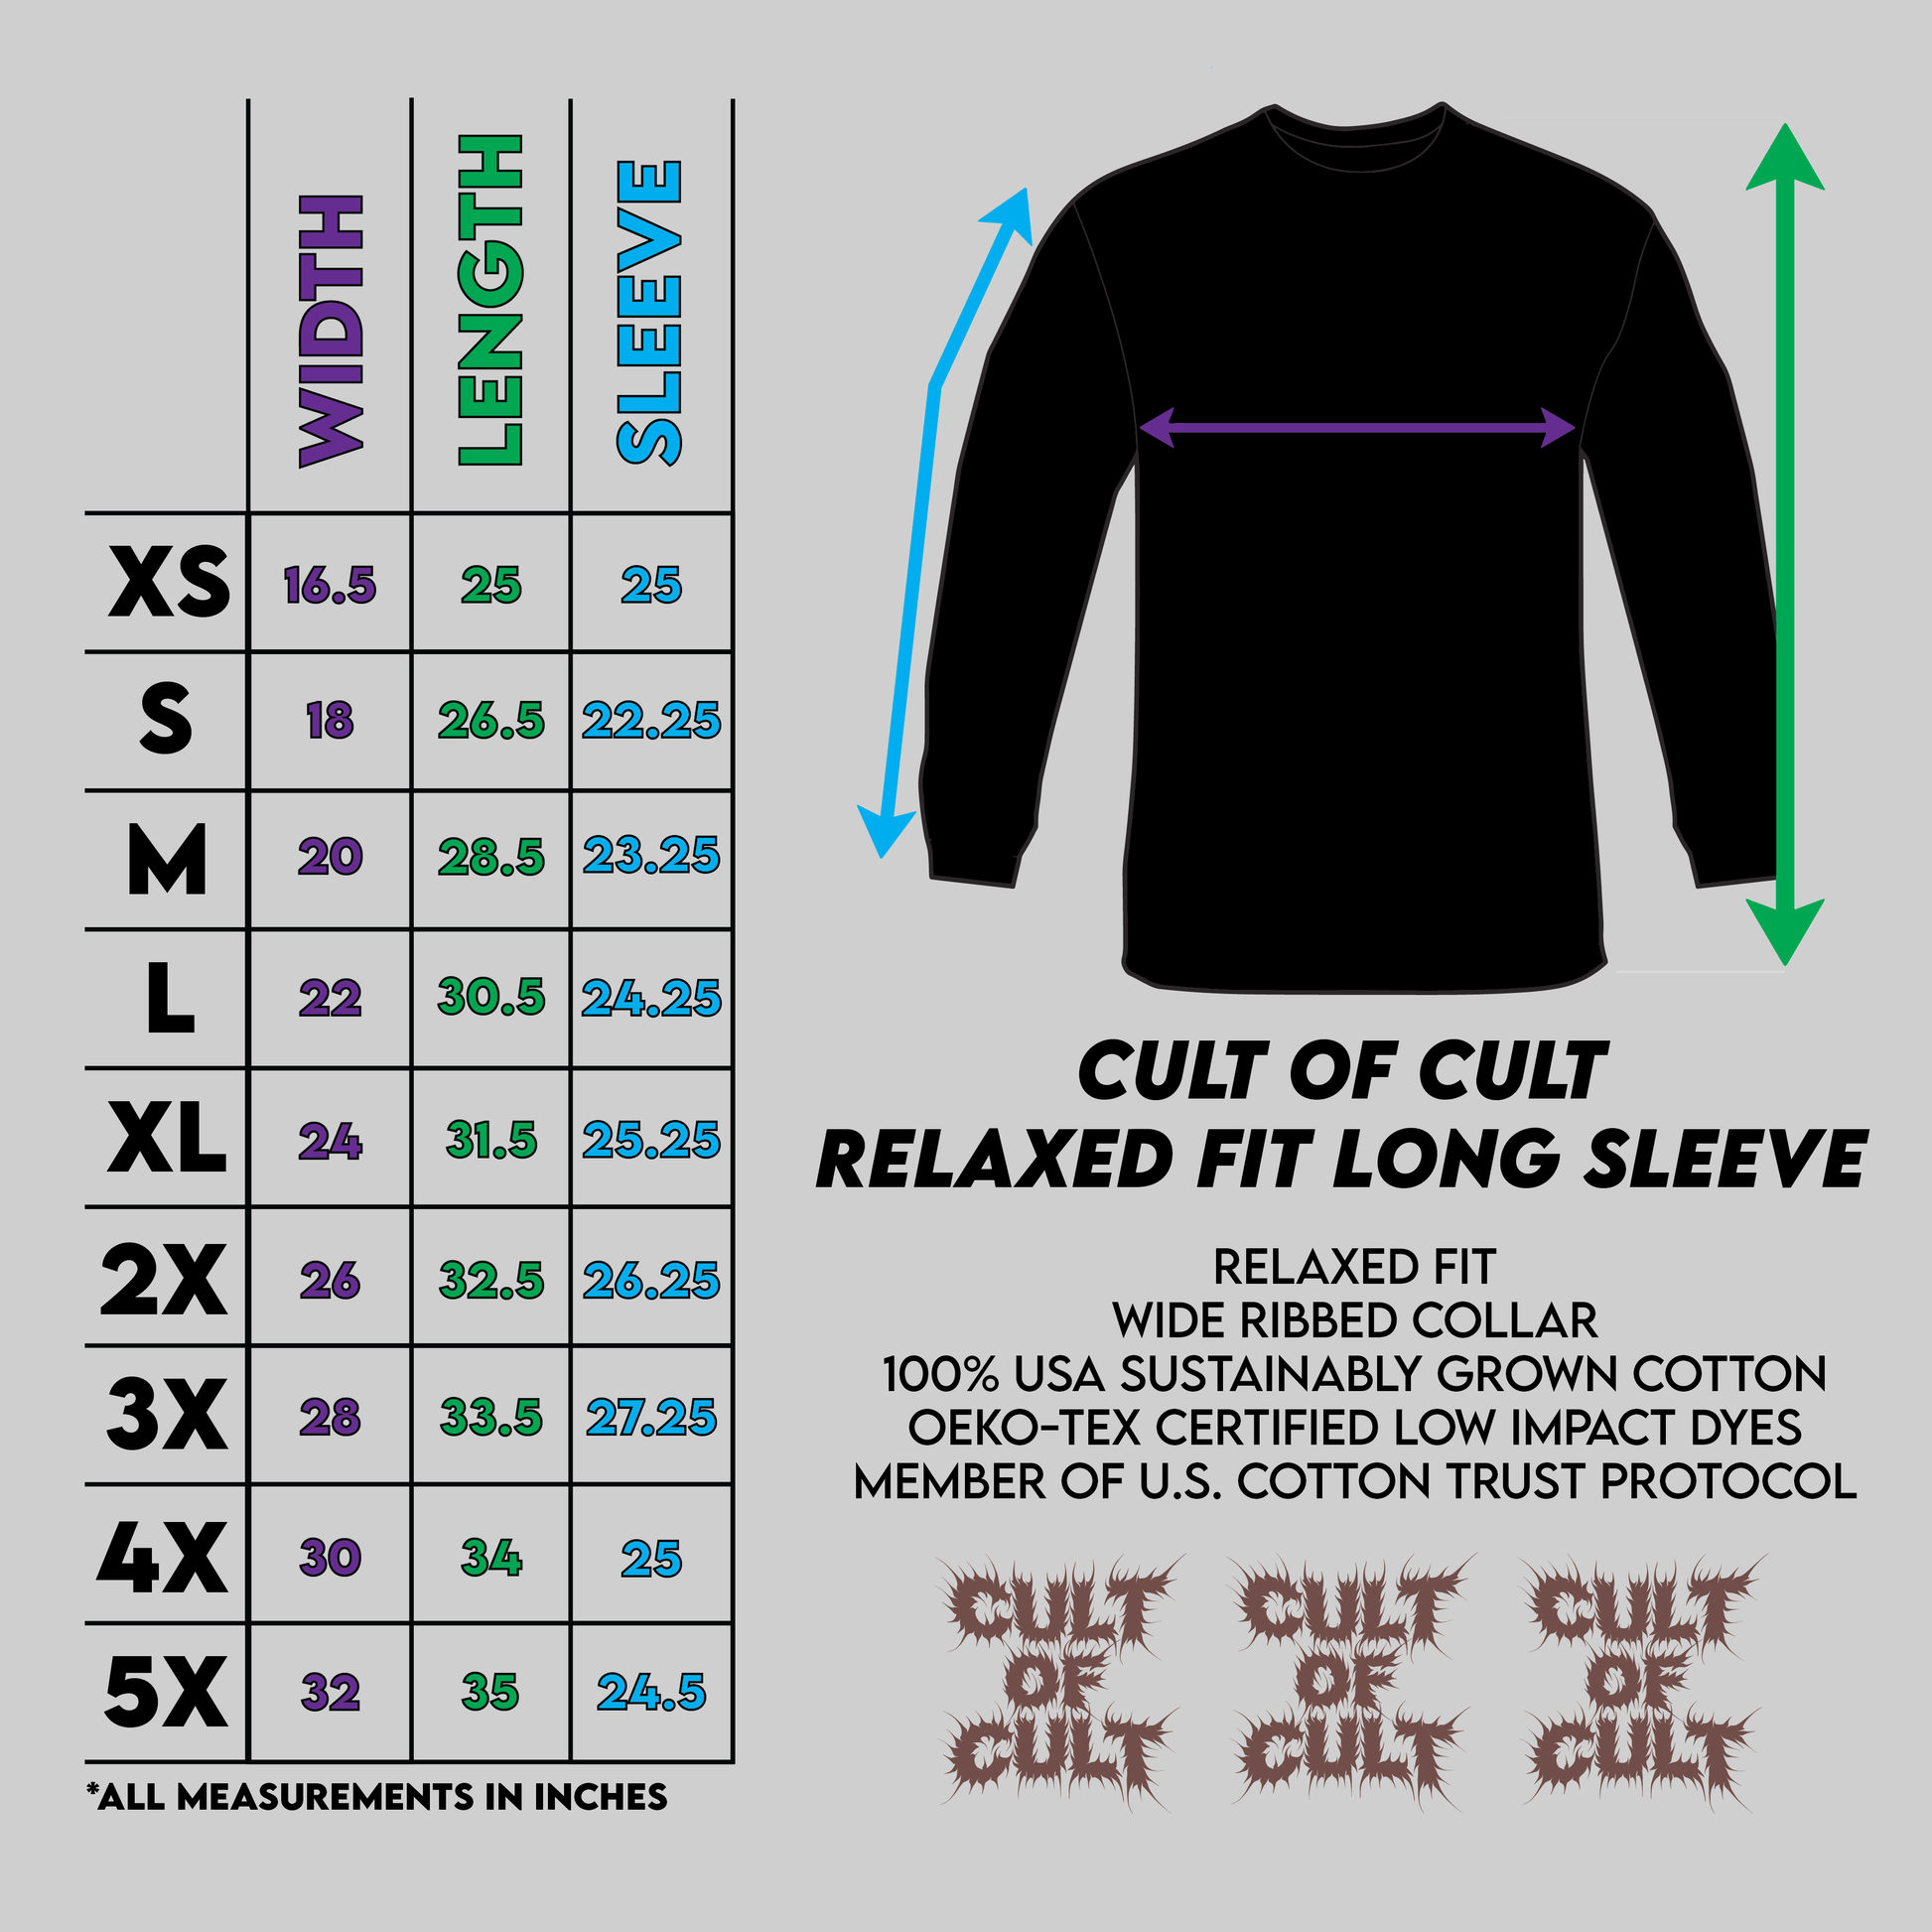 Cult of Cult long sleeve shirt size chart